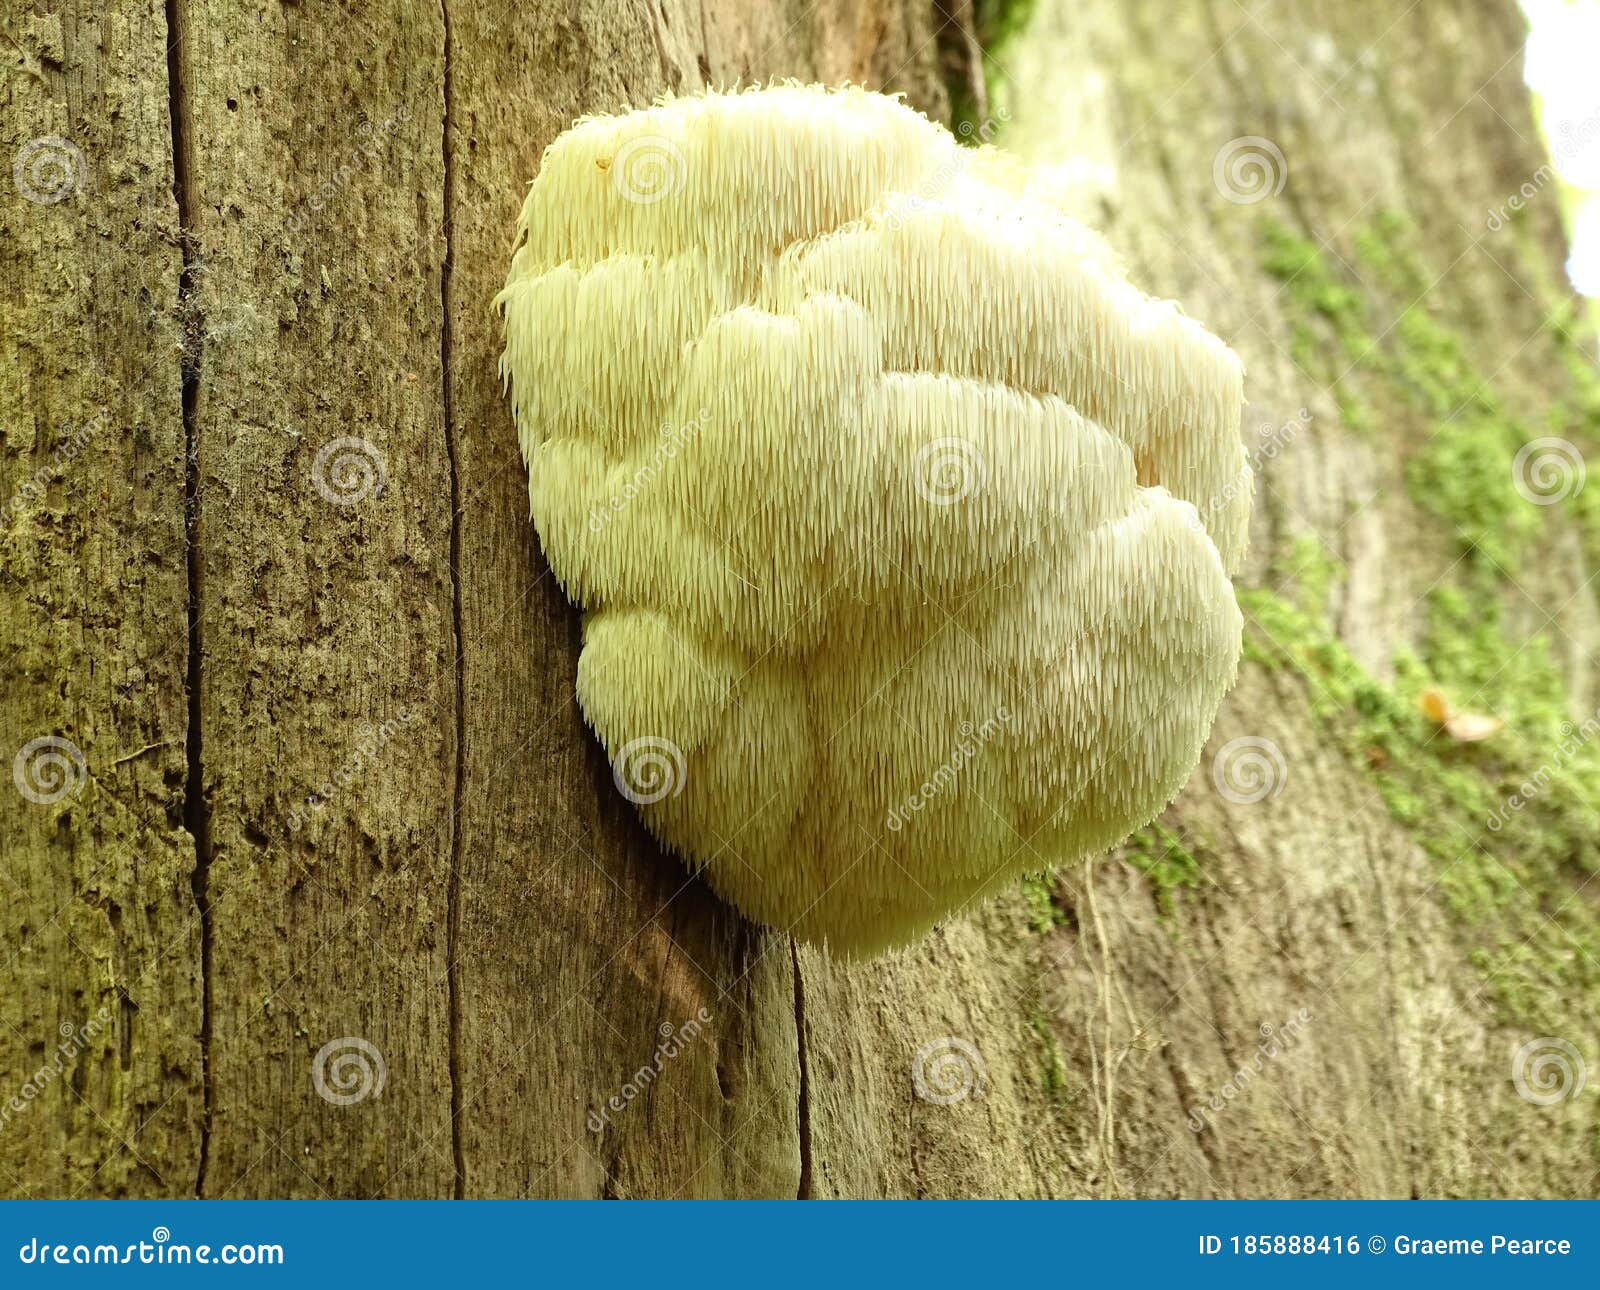 fine example of a lions mane mushroom.